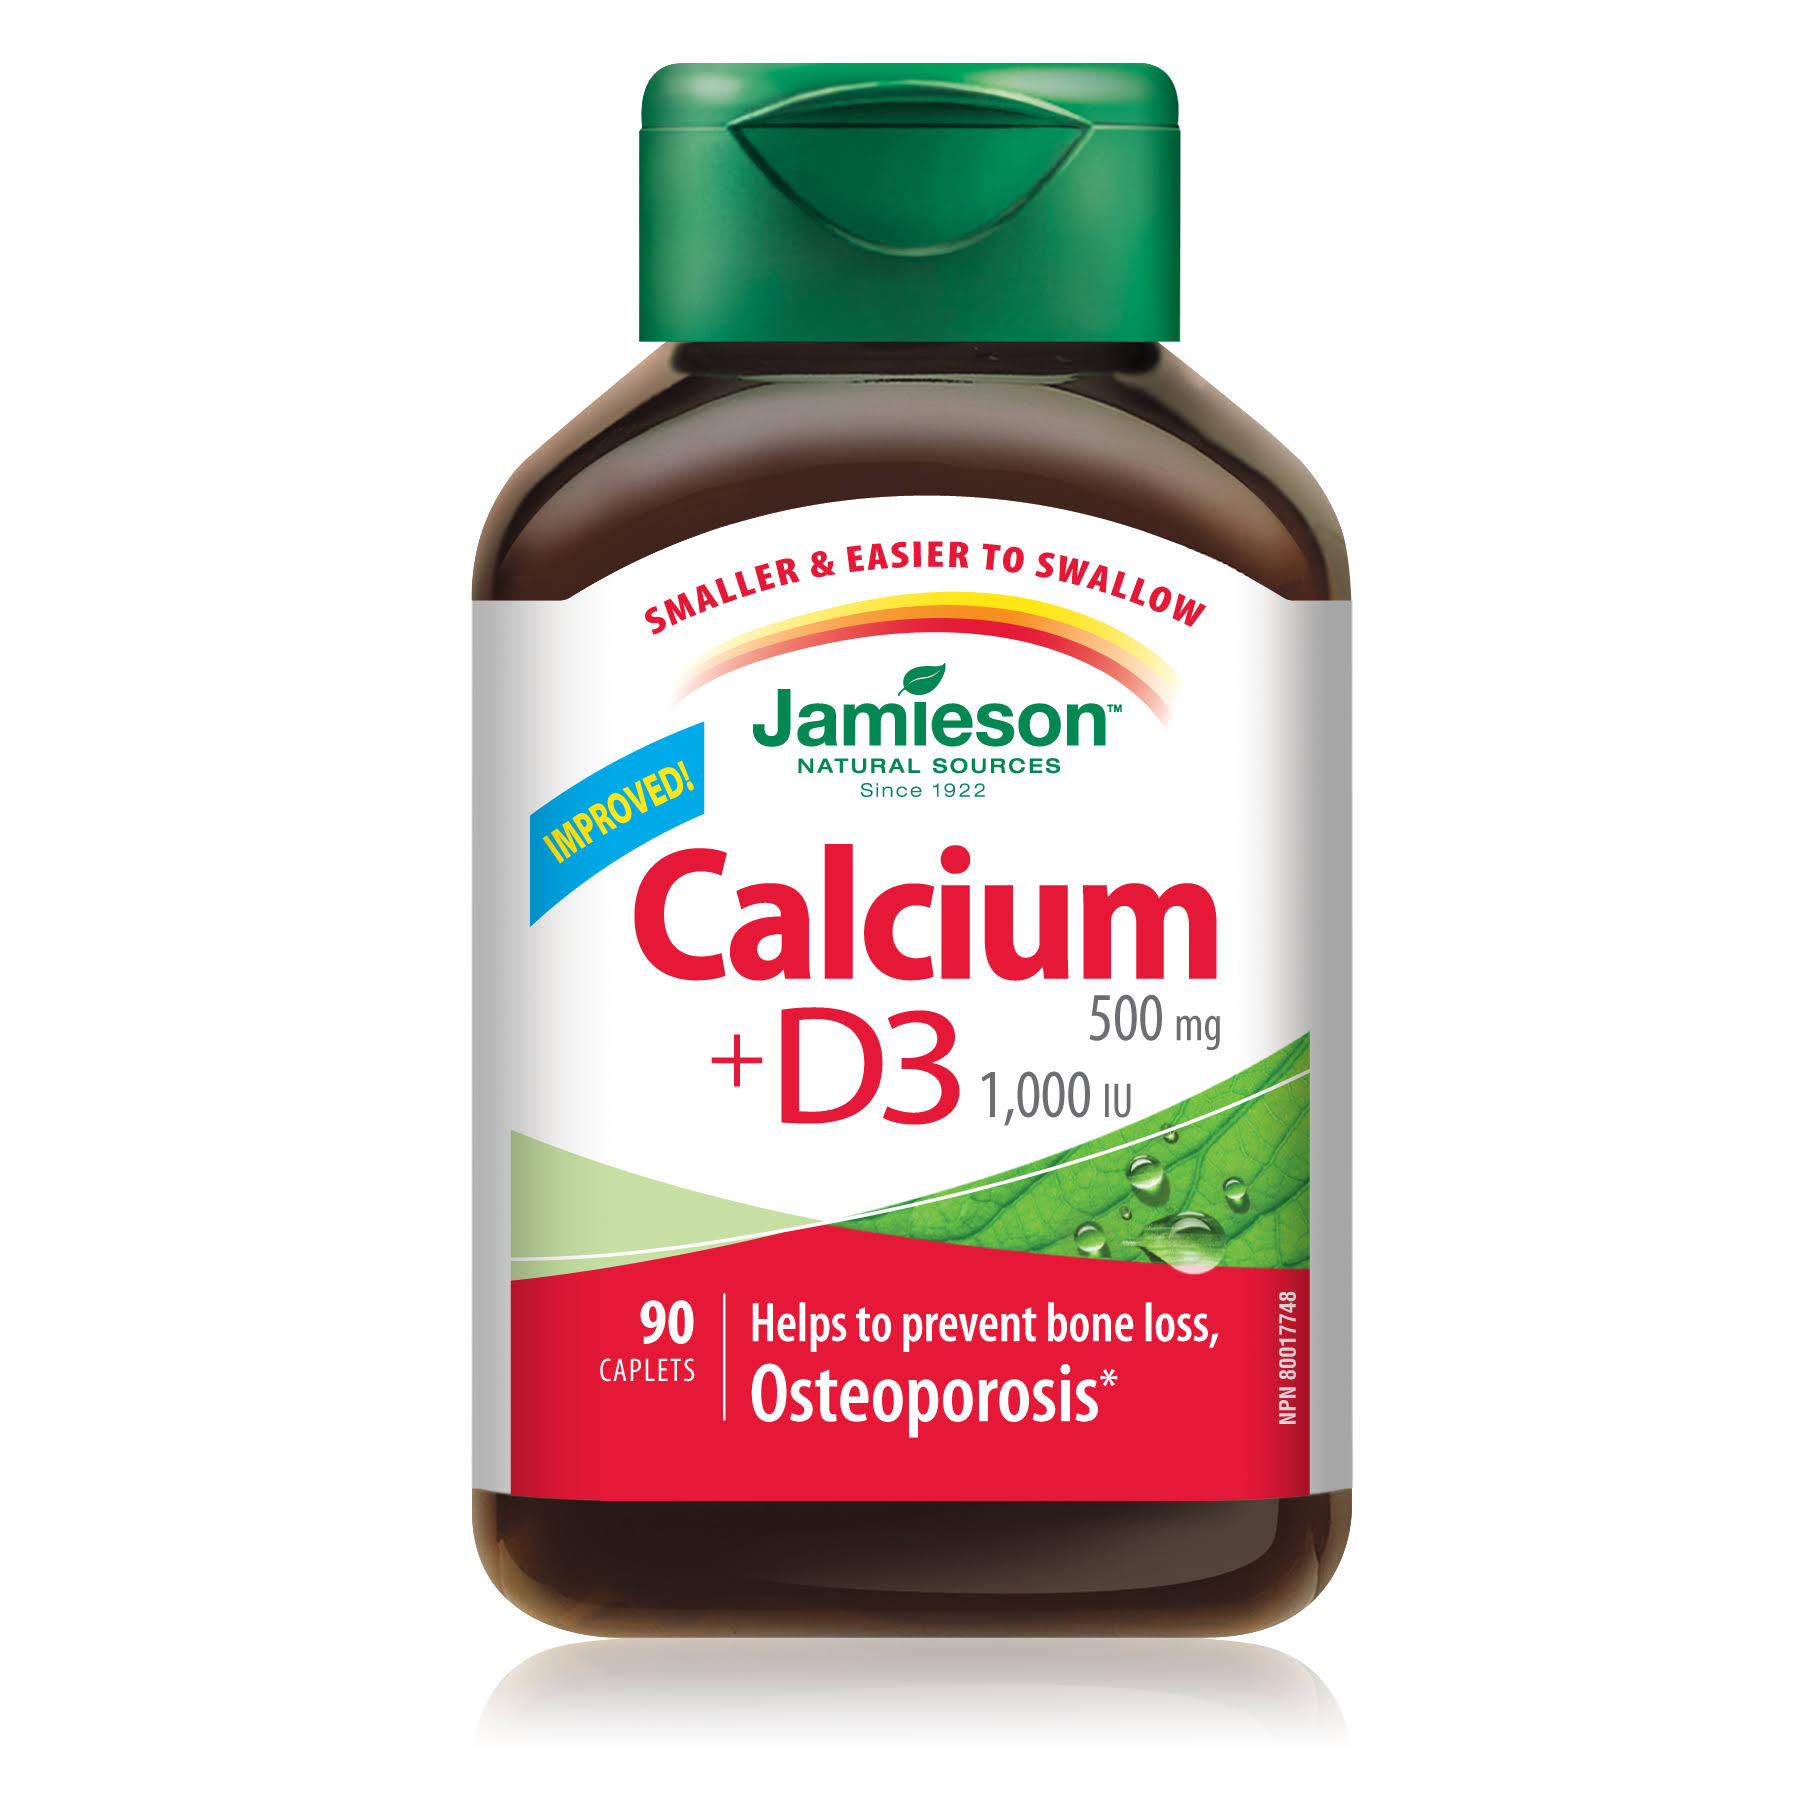 Jamieson Calcium and Vitamin D3 Dietary Supplement - 500mg, 90ct